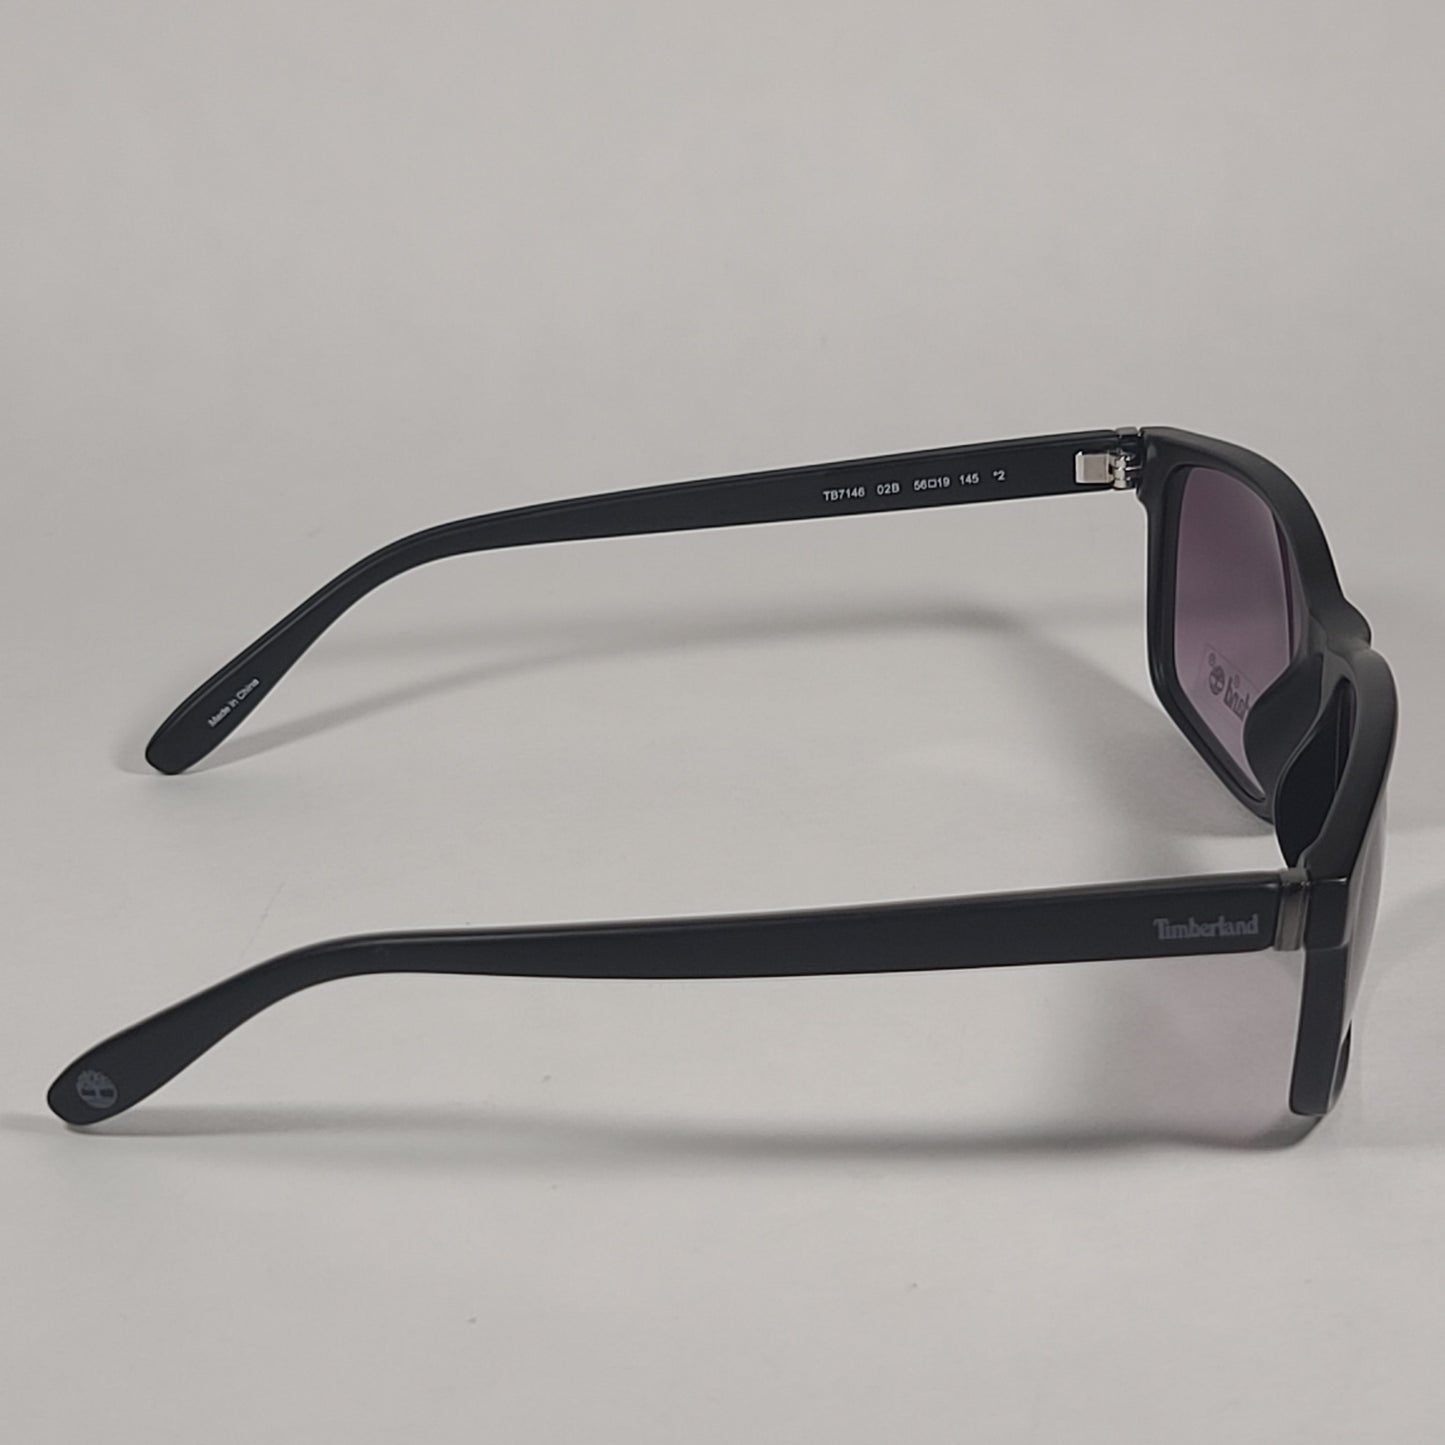 Timberland Rectangle Sunglasses Matte Black Frame Gray Smoke Lens TB7146 02B - Sunglasses